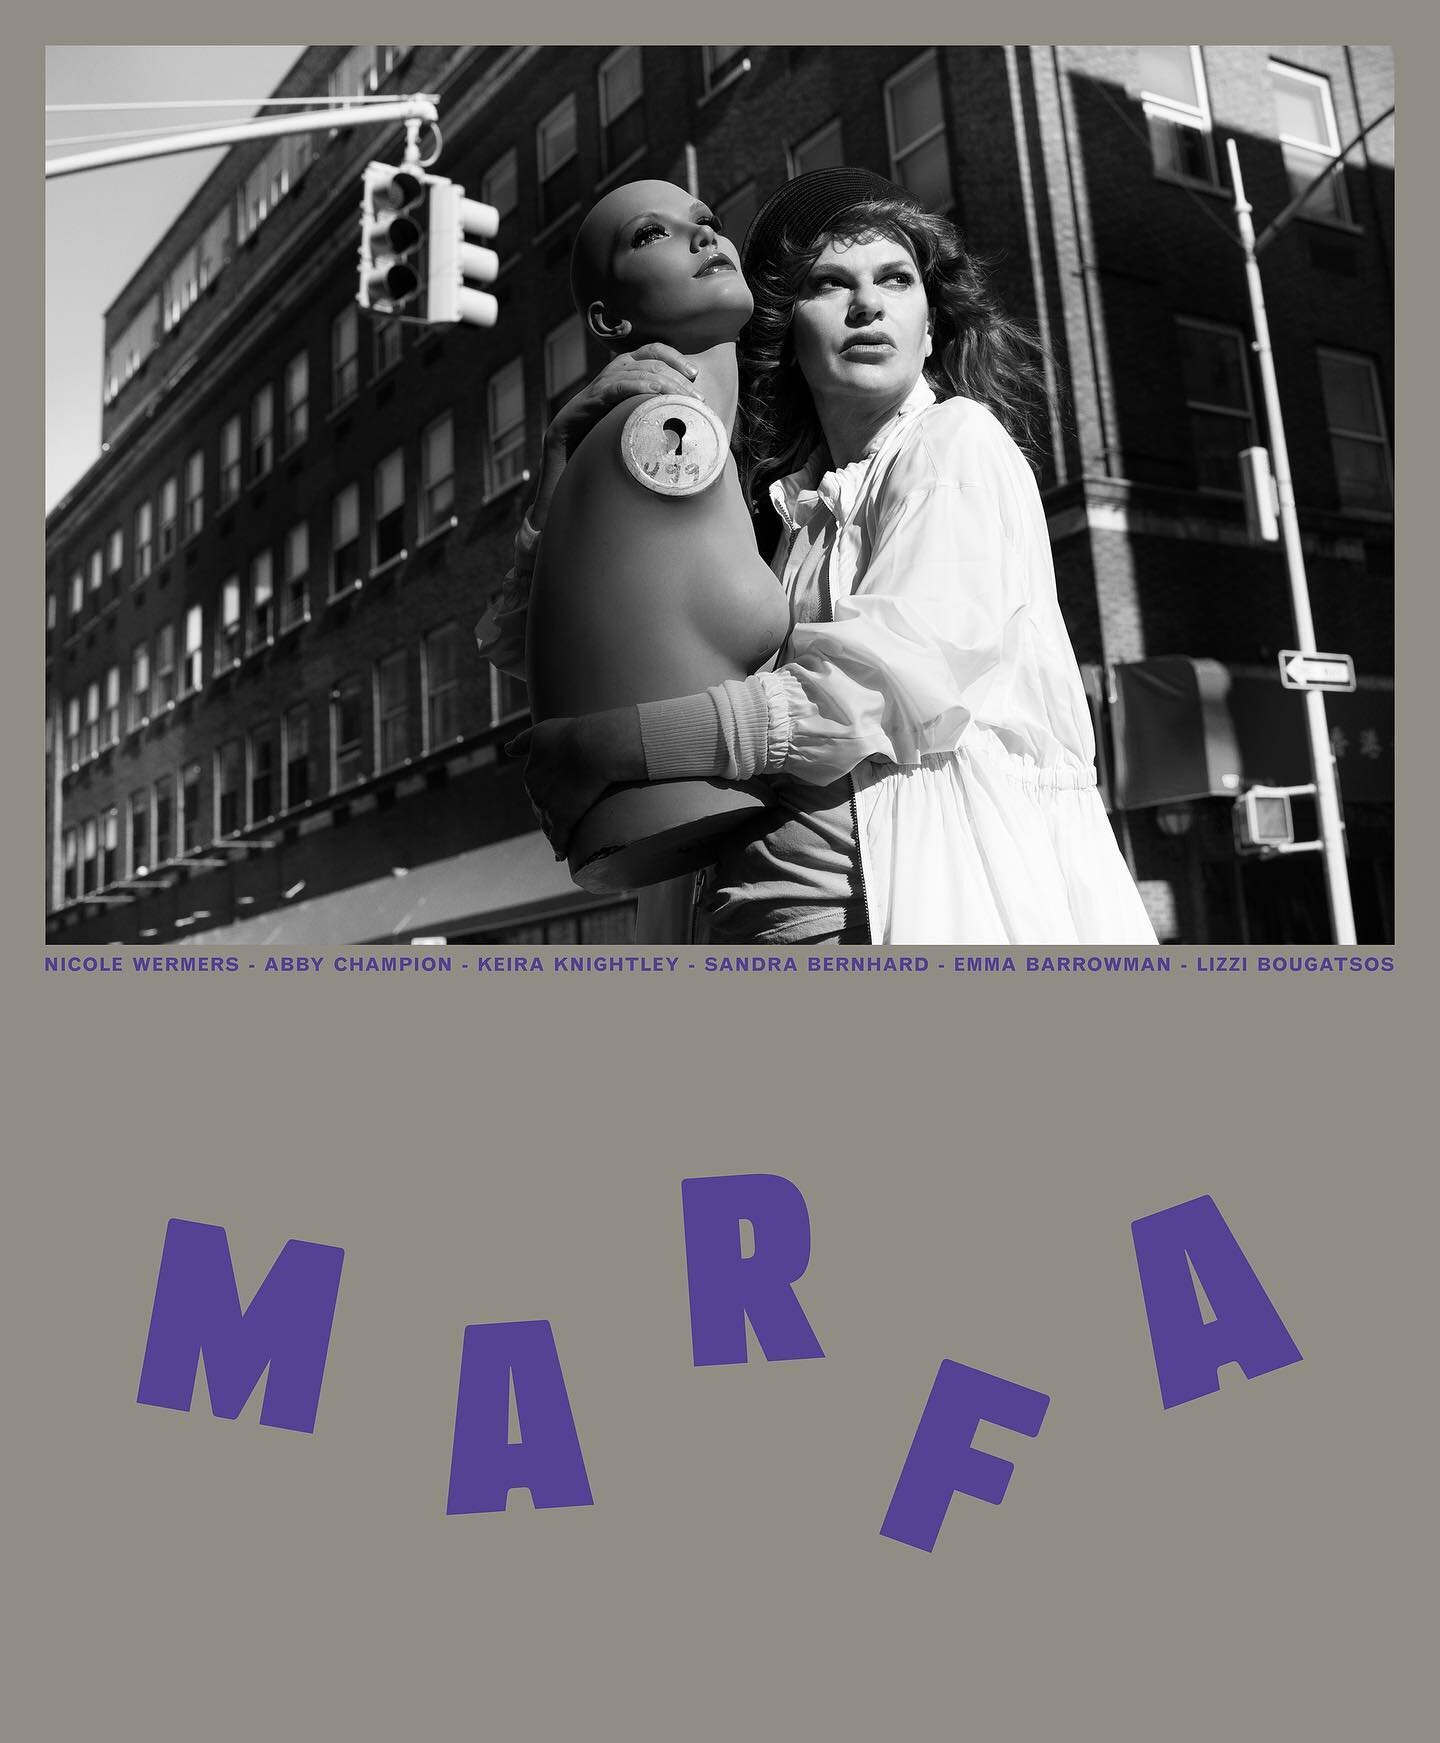 @ethanjamesgreen photographs @sandragbernhard for the cover of @marfajournal shot and based at @cherrystudiosnyc